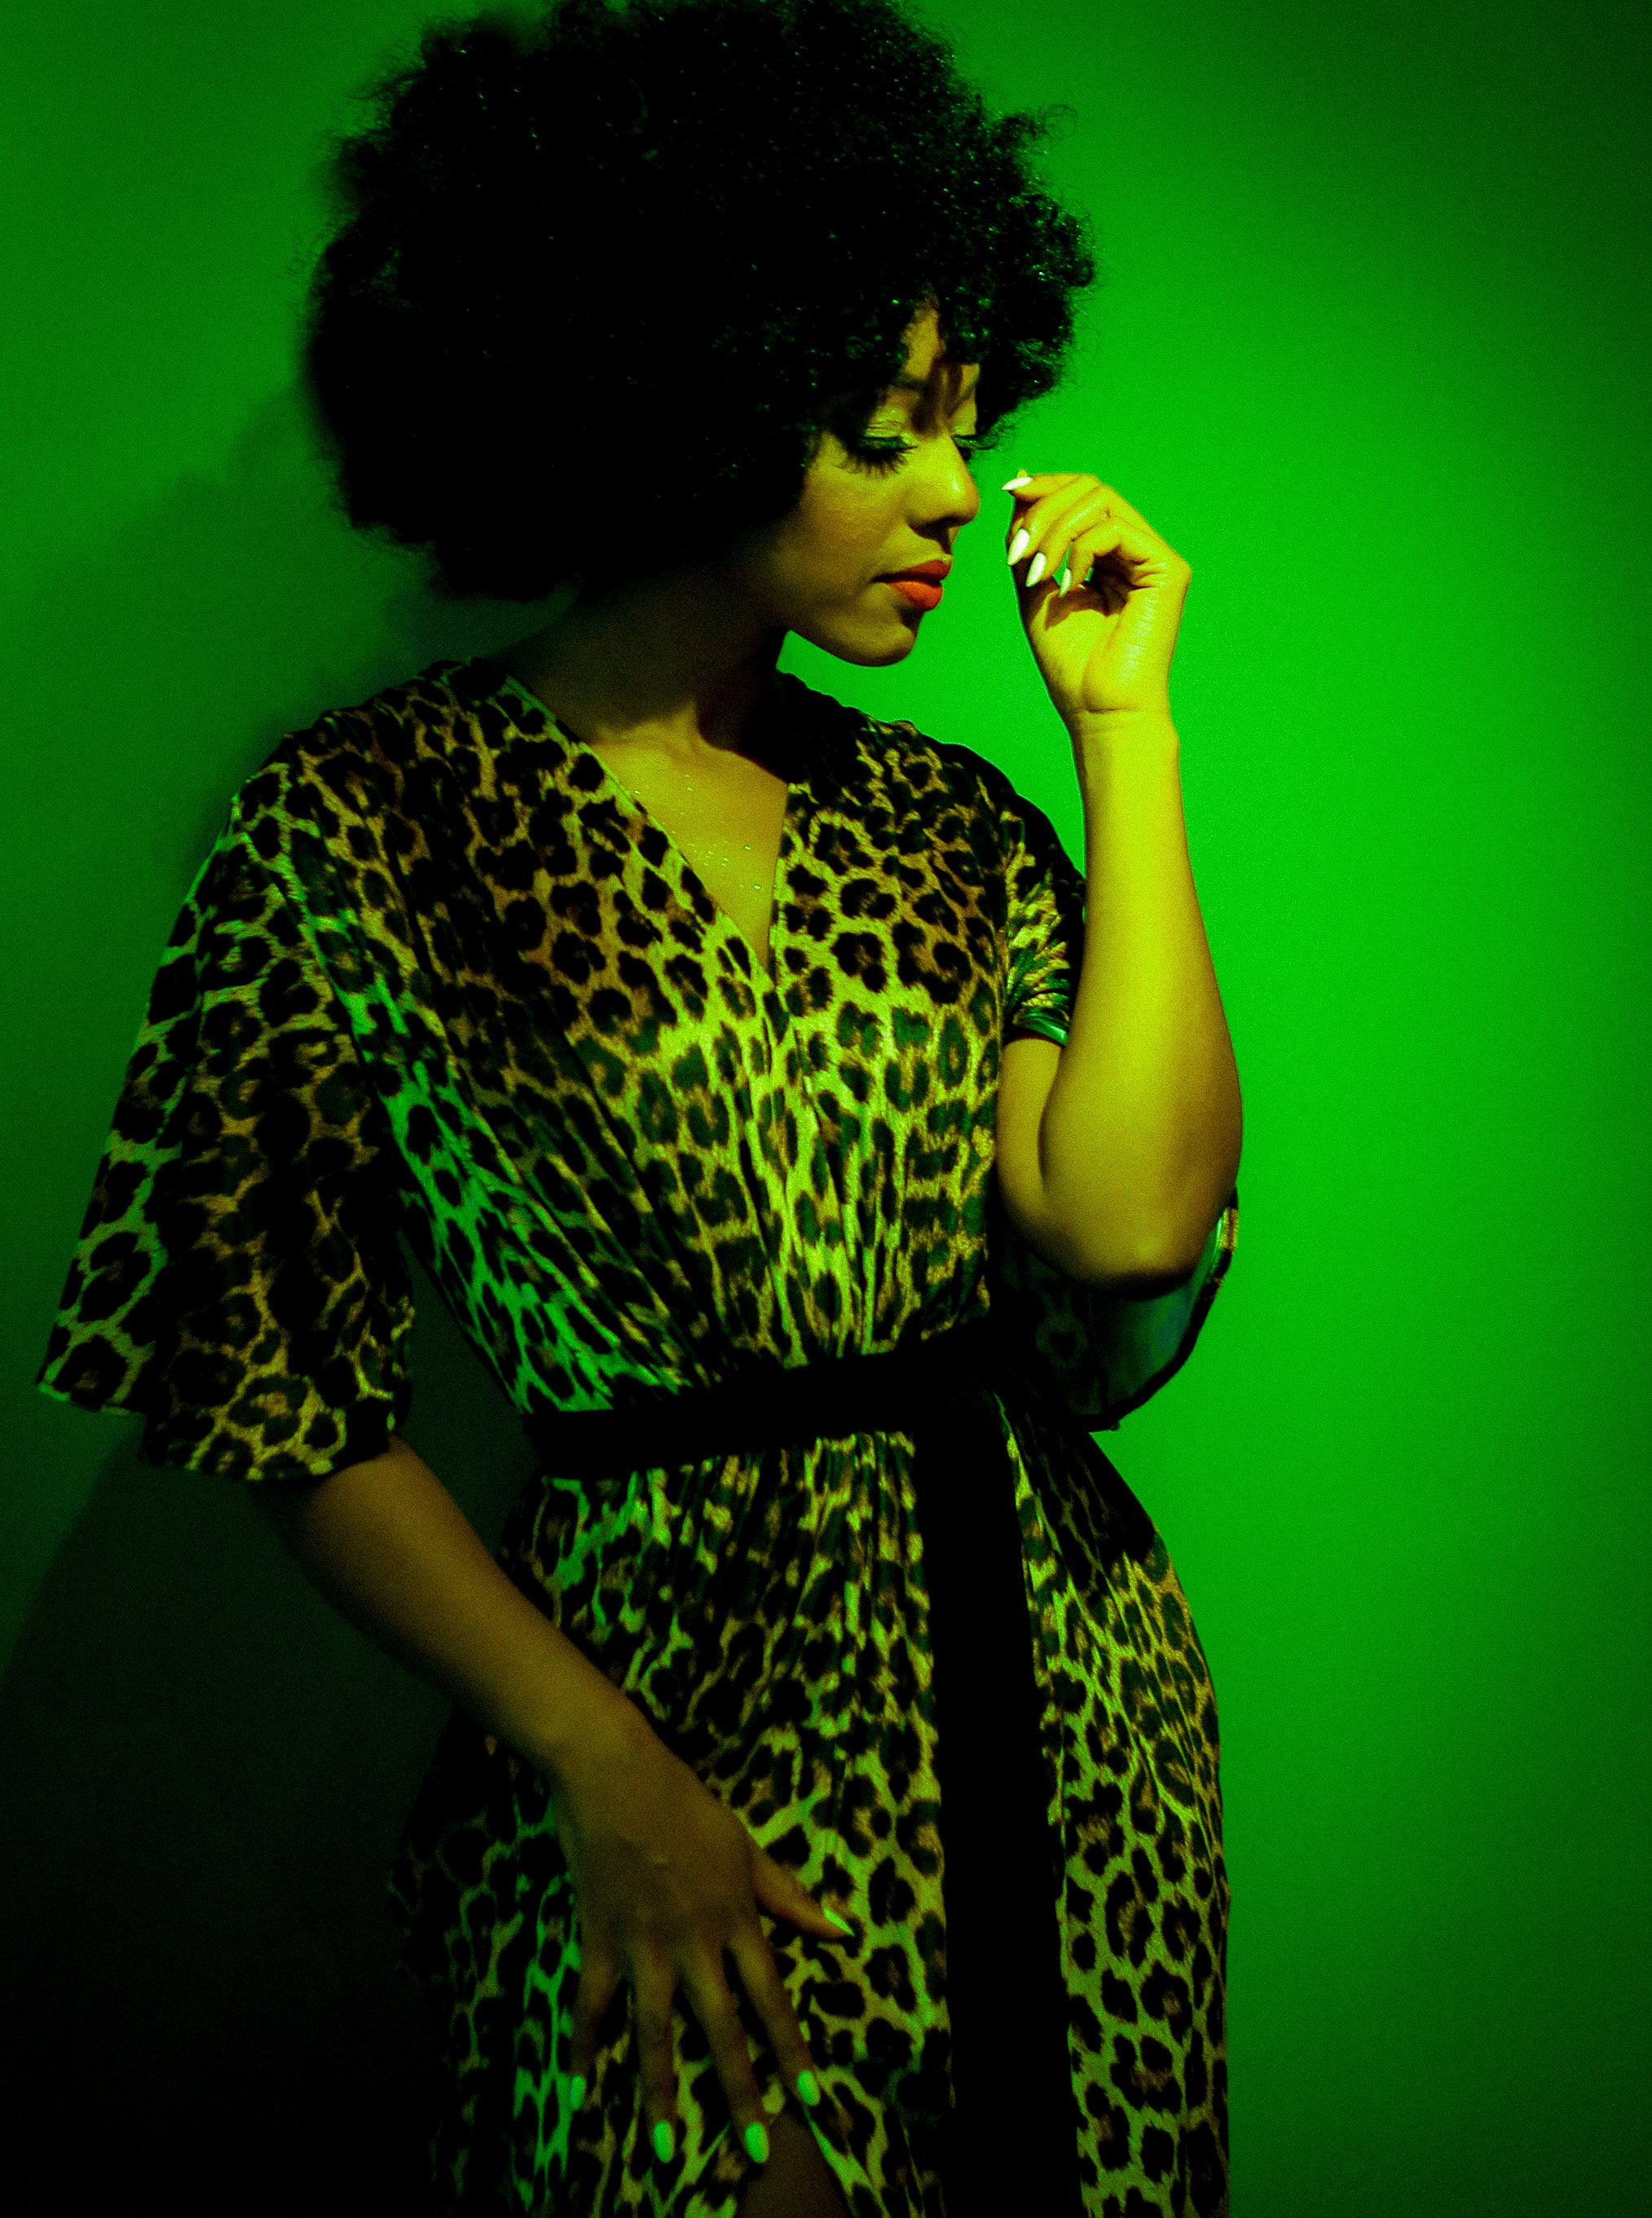 velvet jones portrait photography by alexandra king black woman model